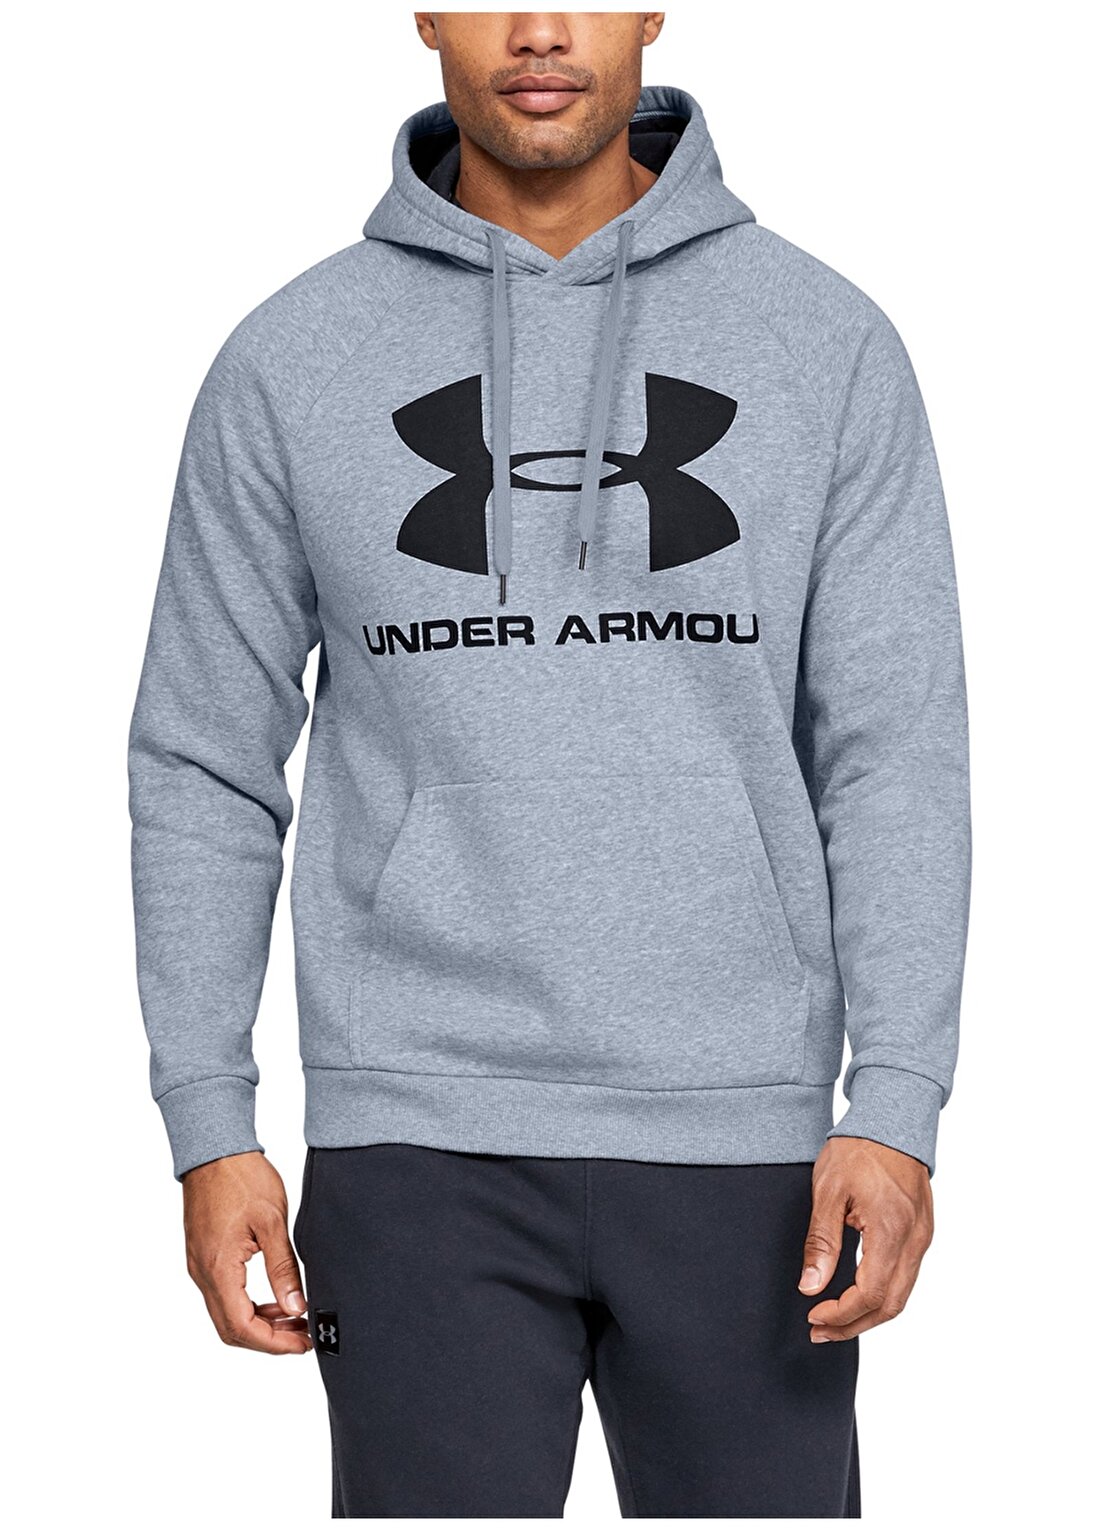 Under Armour Rival Fleece Sportstyle Logo Hoodie Sweatshirt